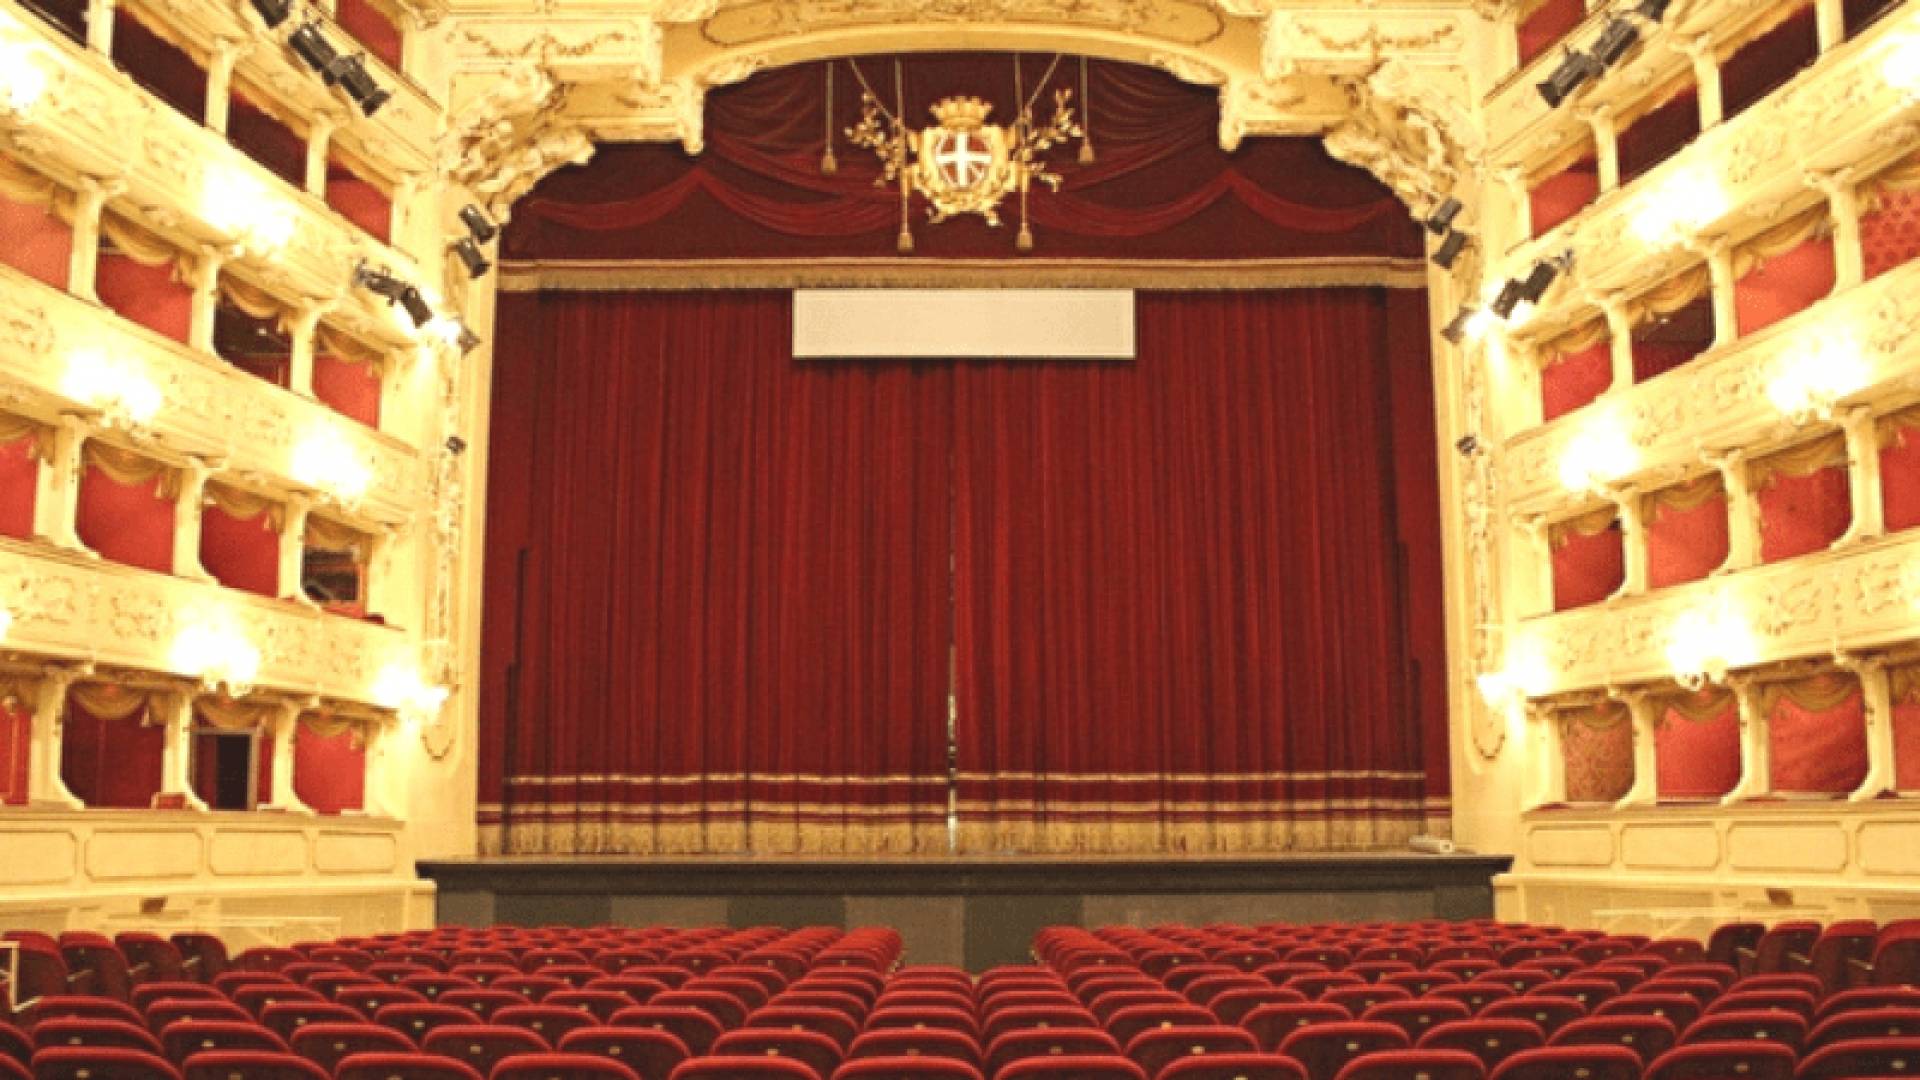 TEATRO SOCIALE THEATER, COMO, Teatro Sociale Theater, Como